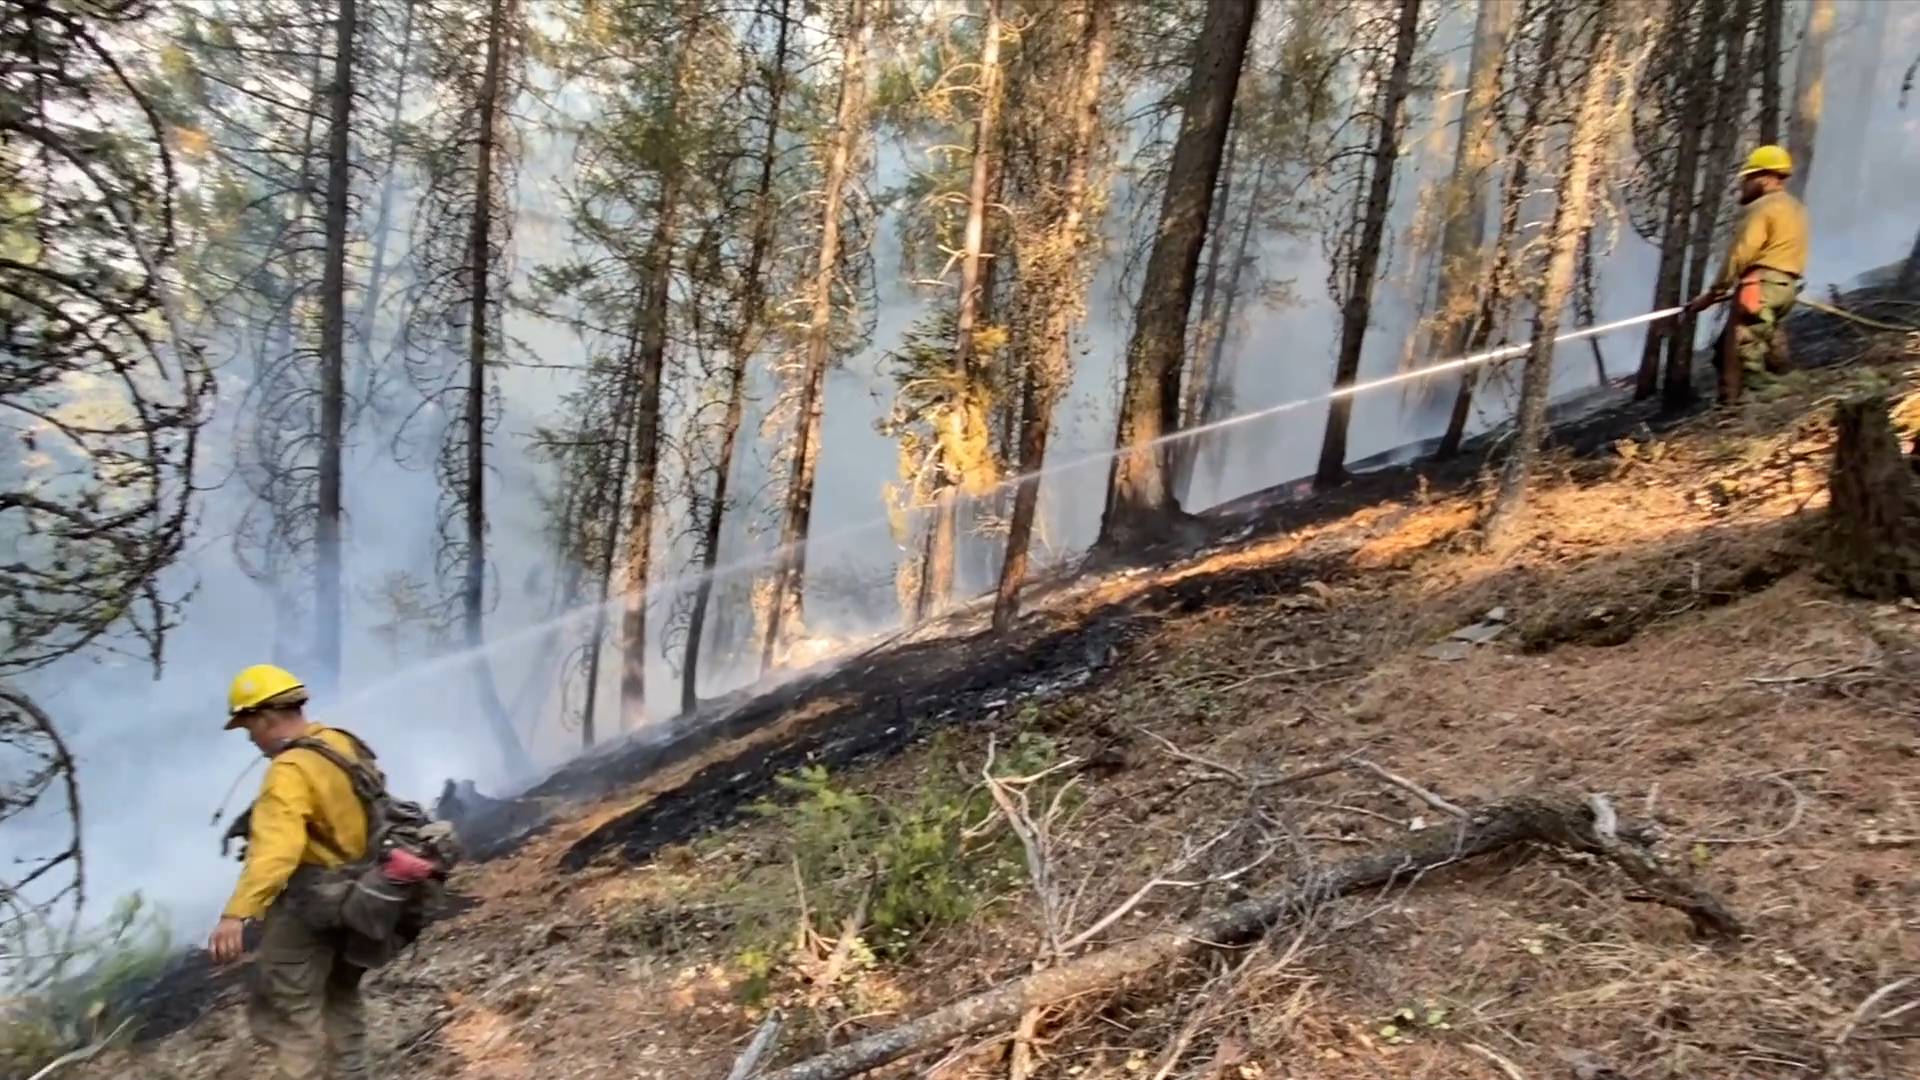 GLOBALink | Dixie Fire burns over 700,000 acres in U.S. California